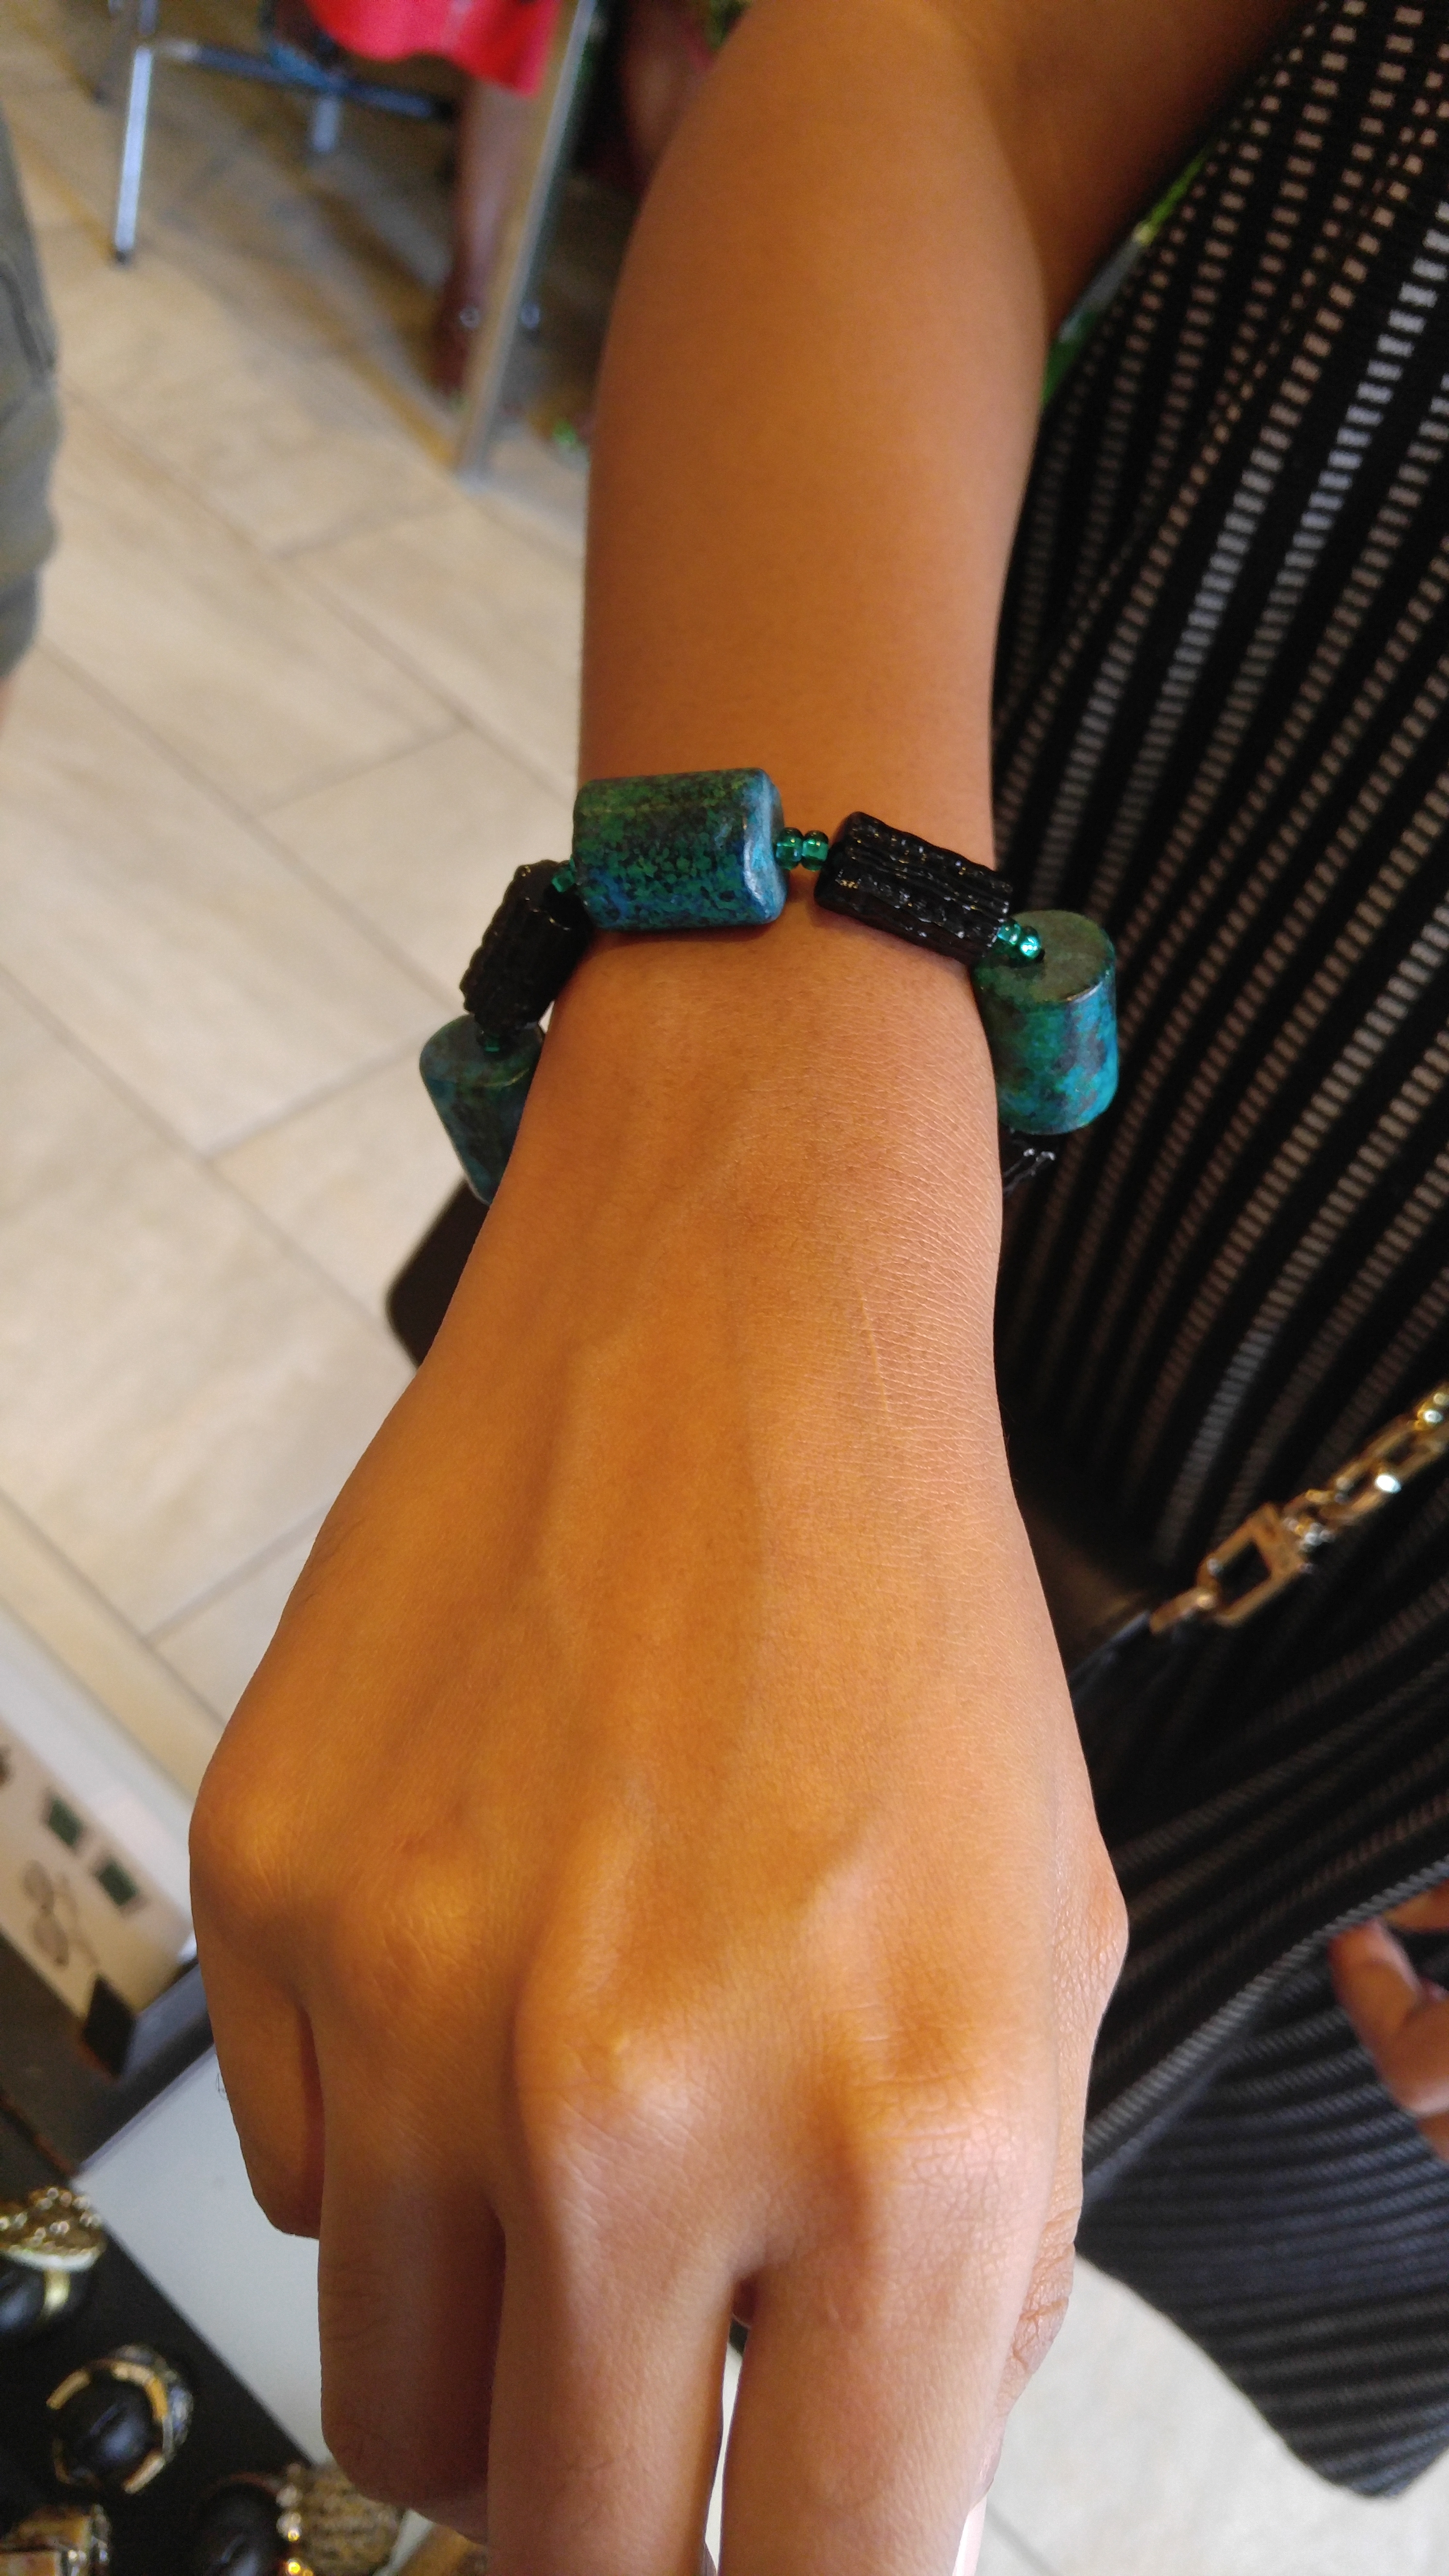 Turquoise bracelet designed by Nikus, Adams Morgans Day 2016